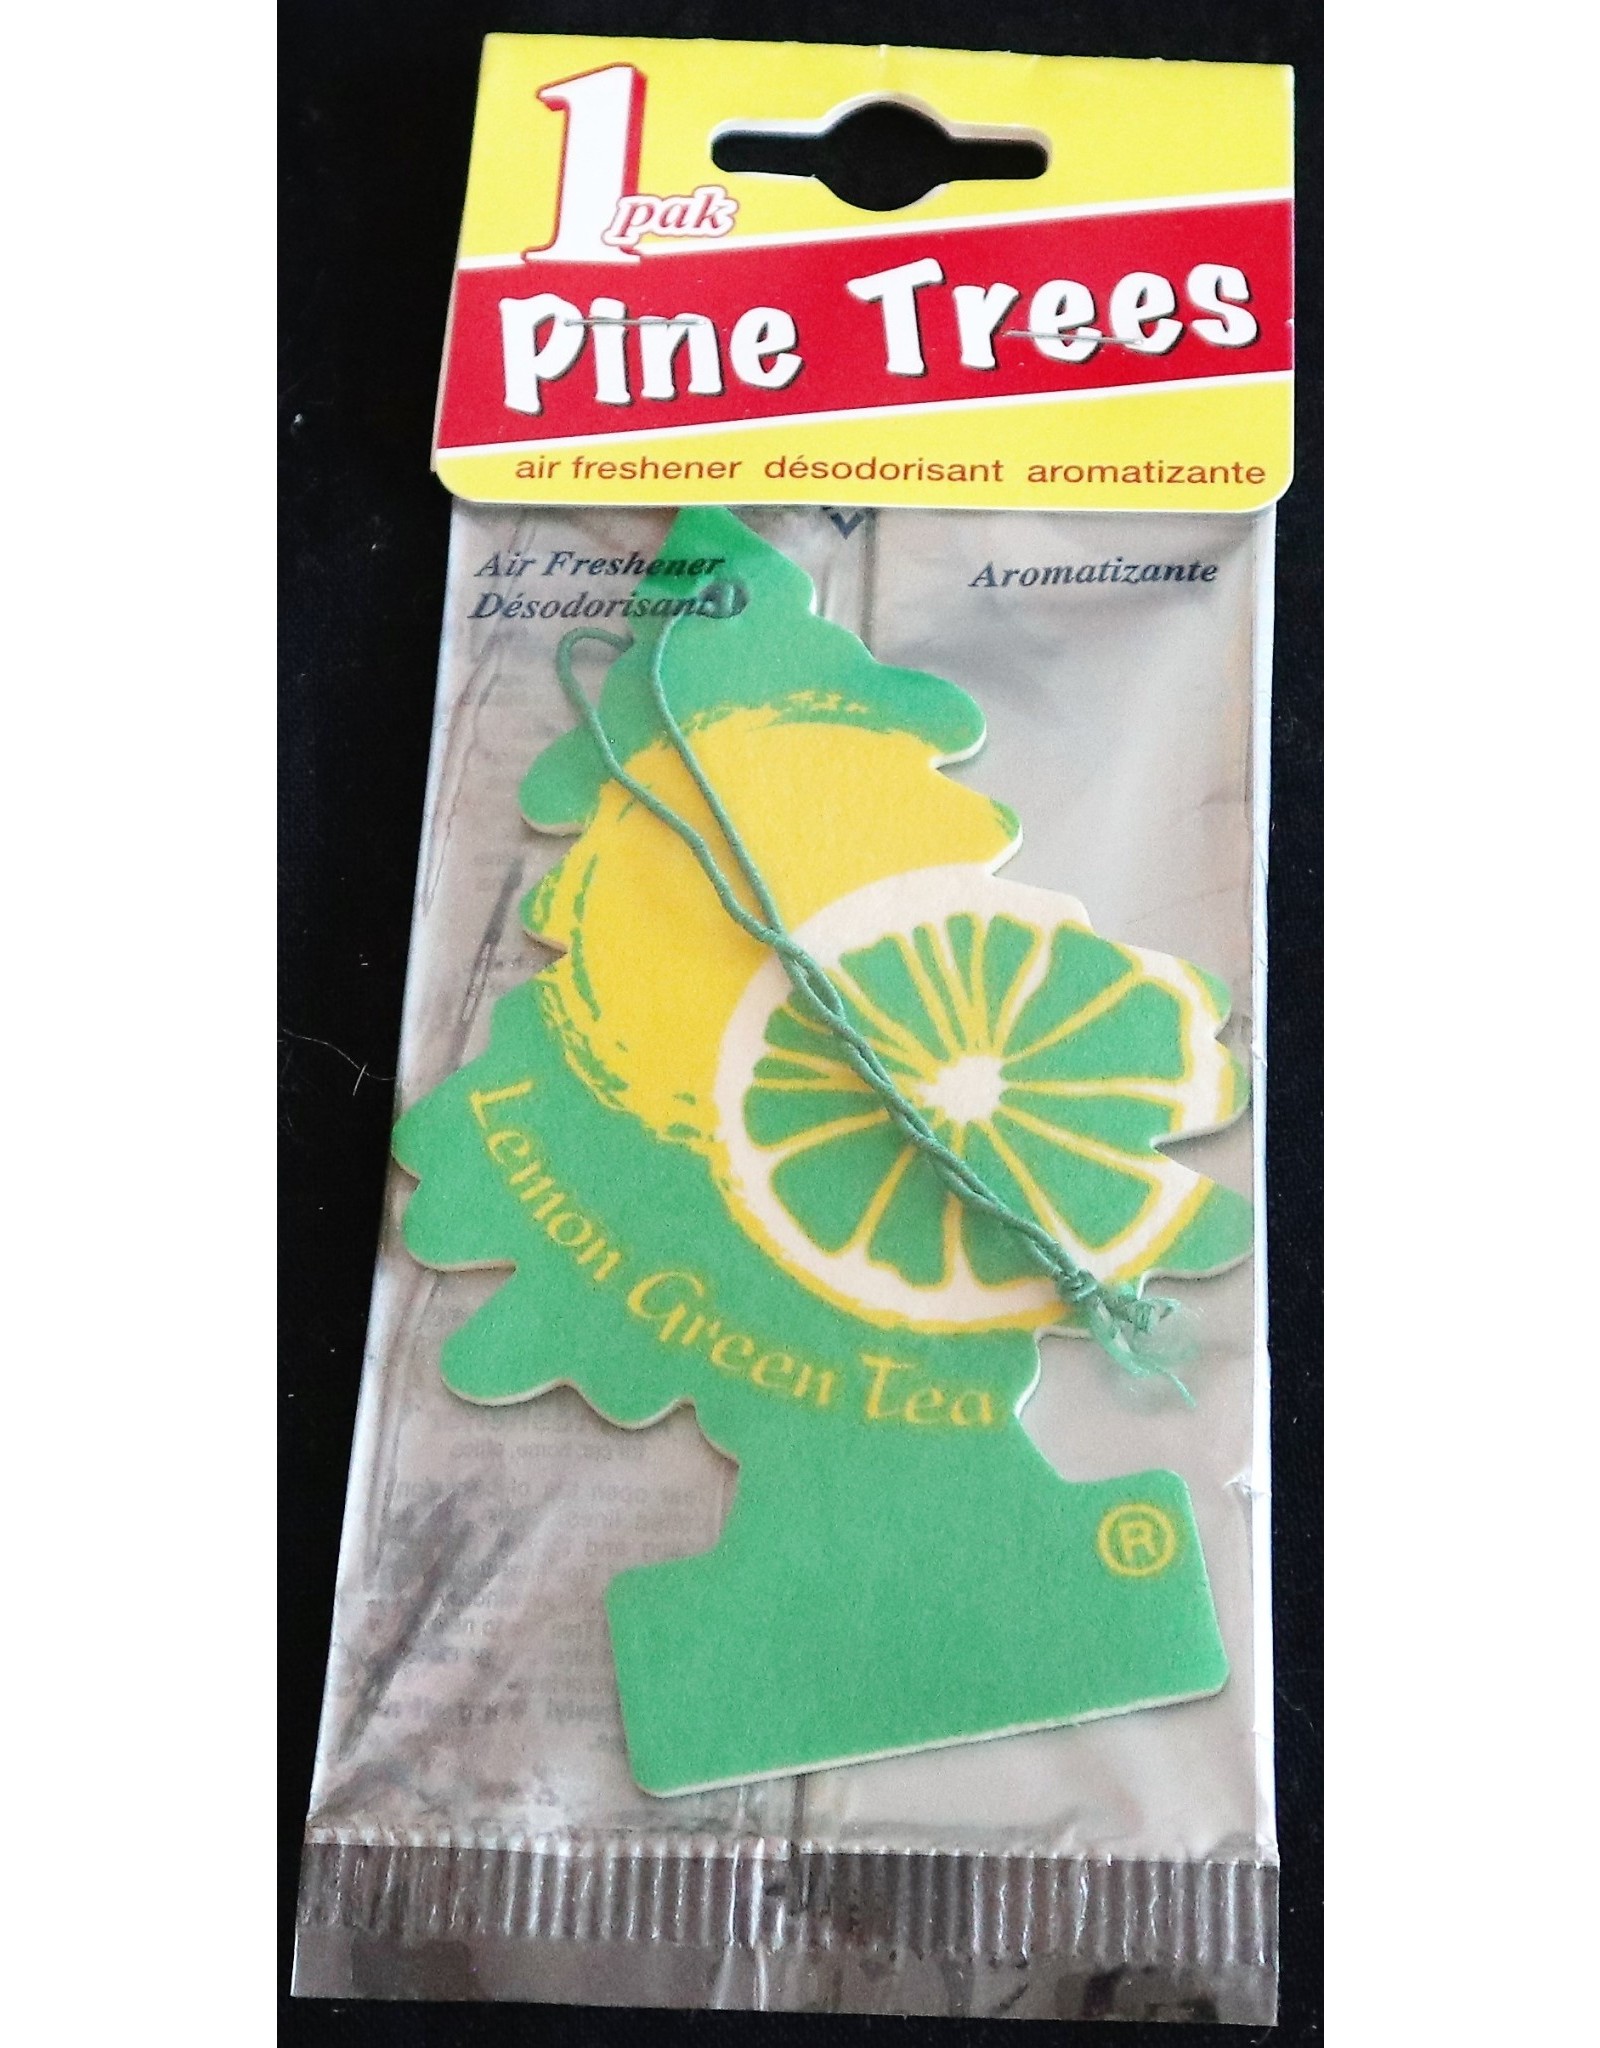 G & S Distributors (disc) Pine Trees - Lemon Green Tea - Tree - 1 pack